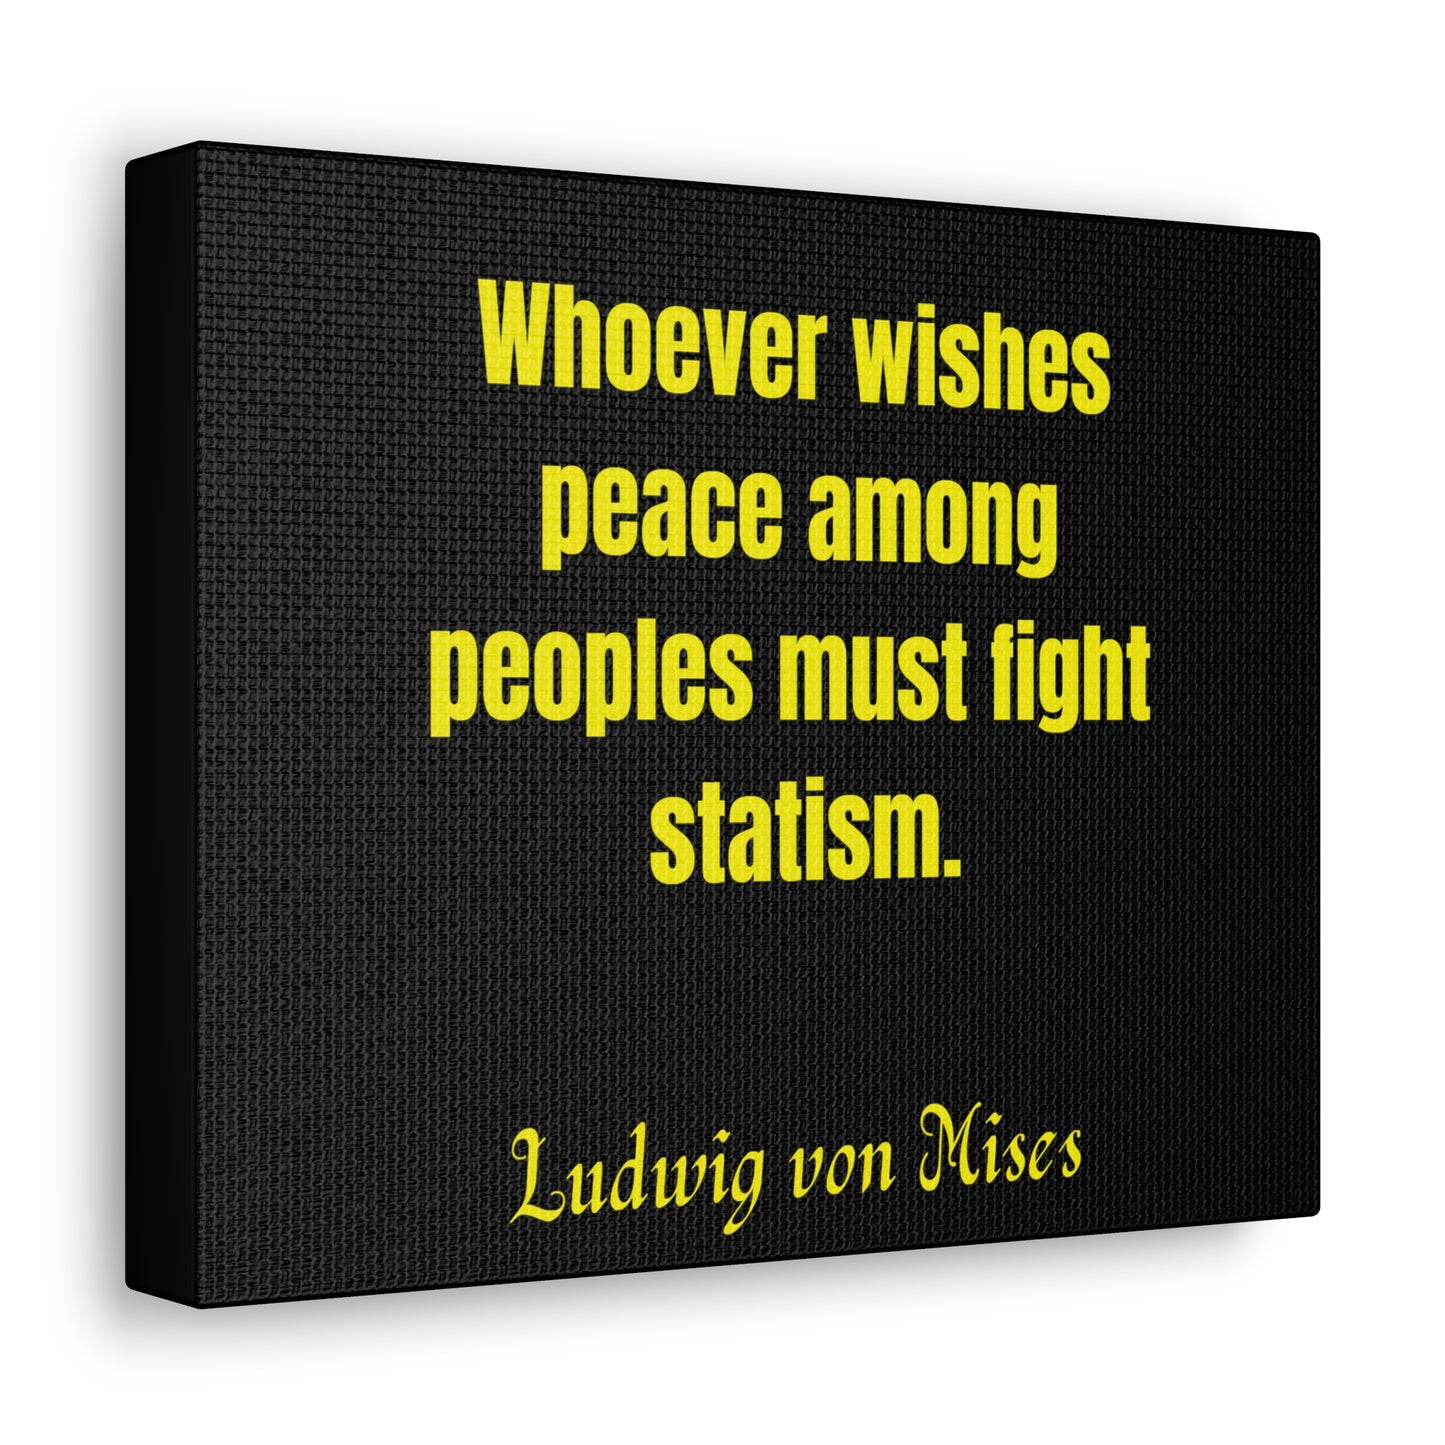 Ludwig von Mises "Fight Statism" Canvas